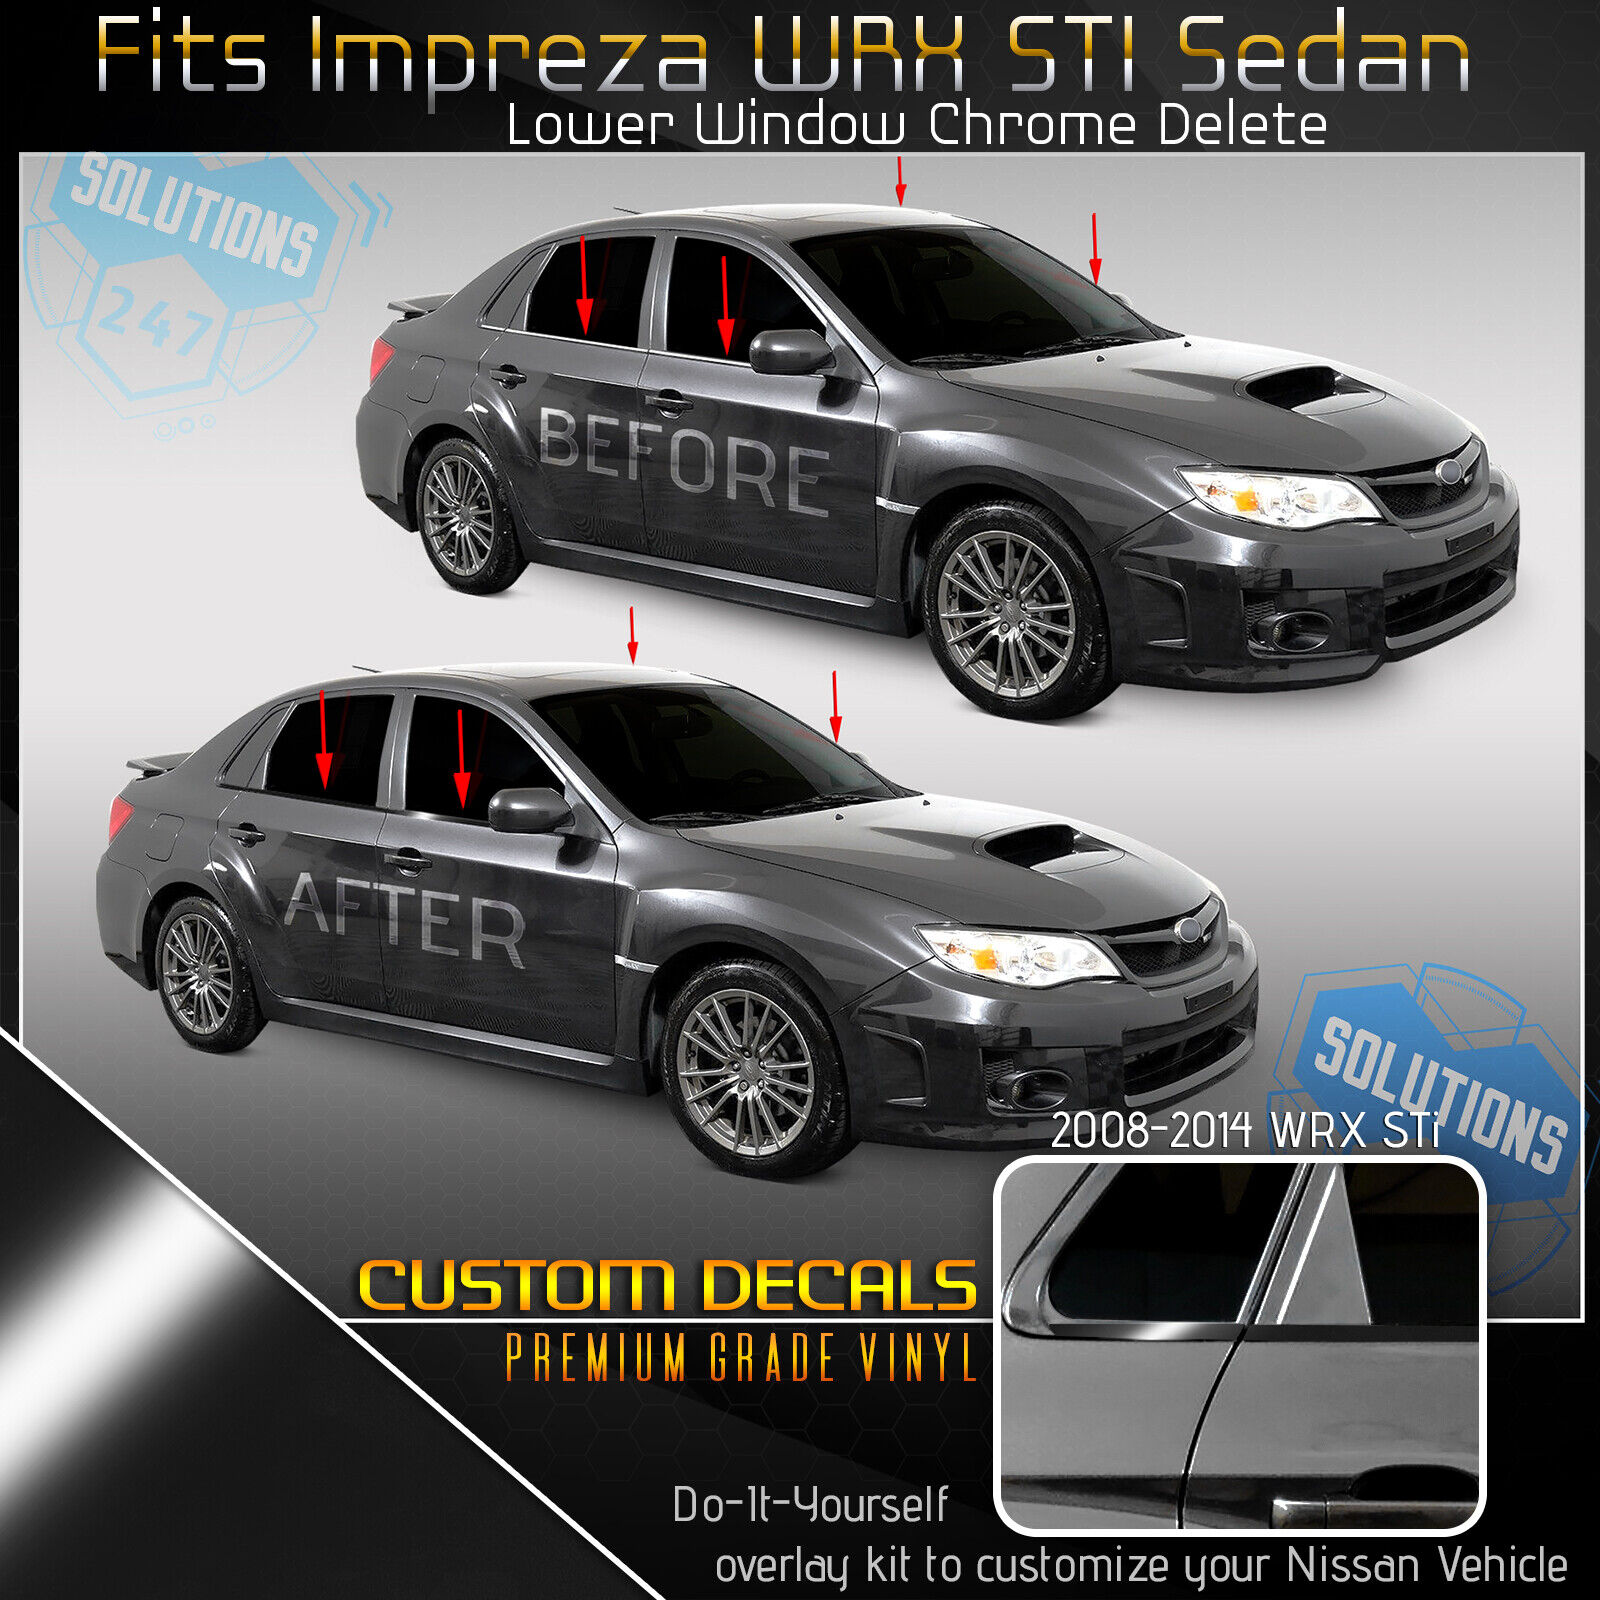 Fits 08-14 Impreza WRX STi Sedan Window Chrome Delete Blackout Kit - Gloss Black